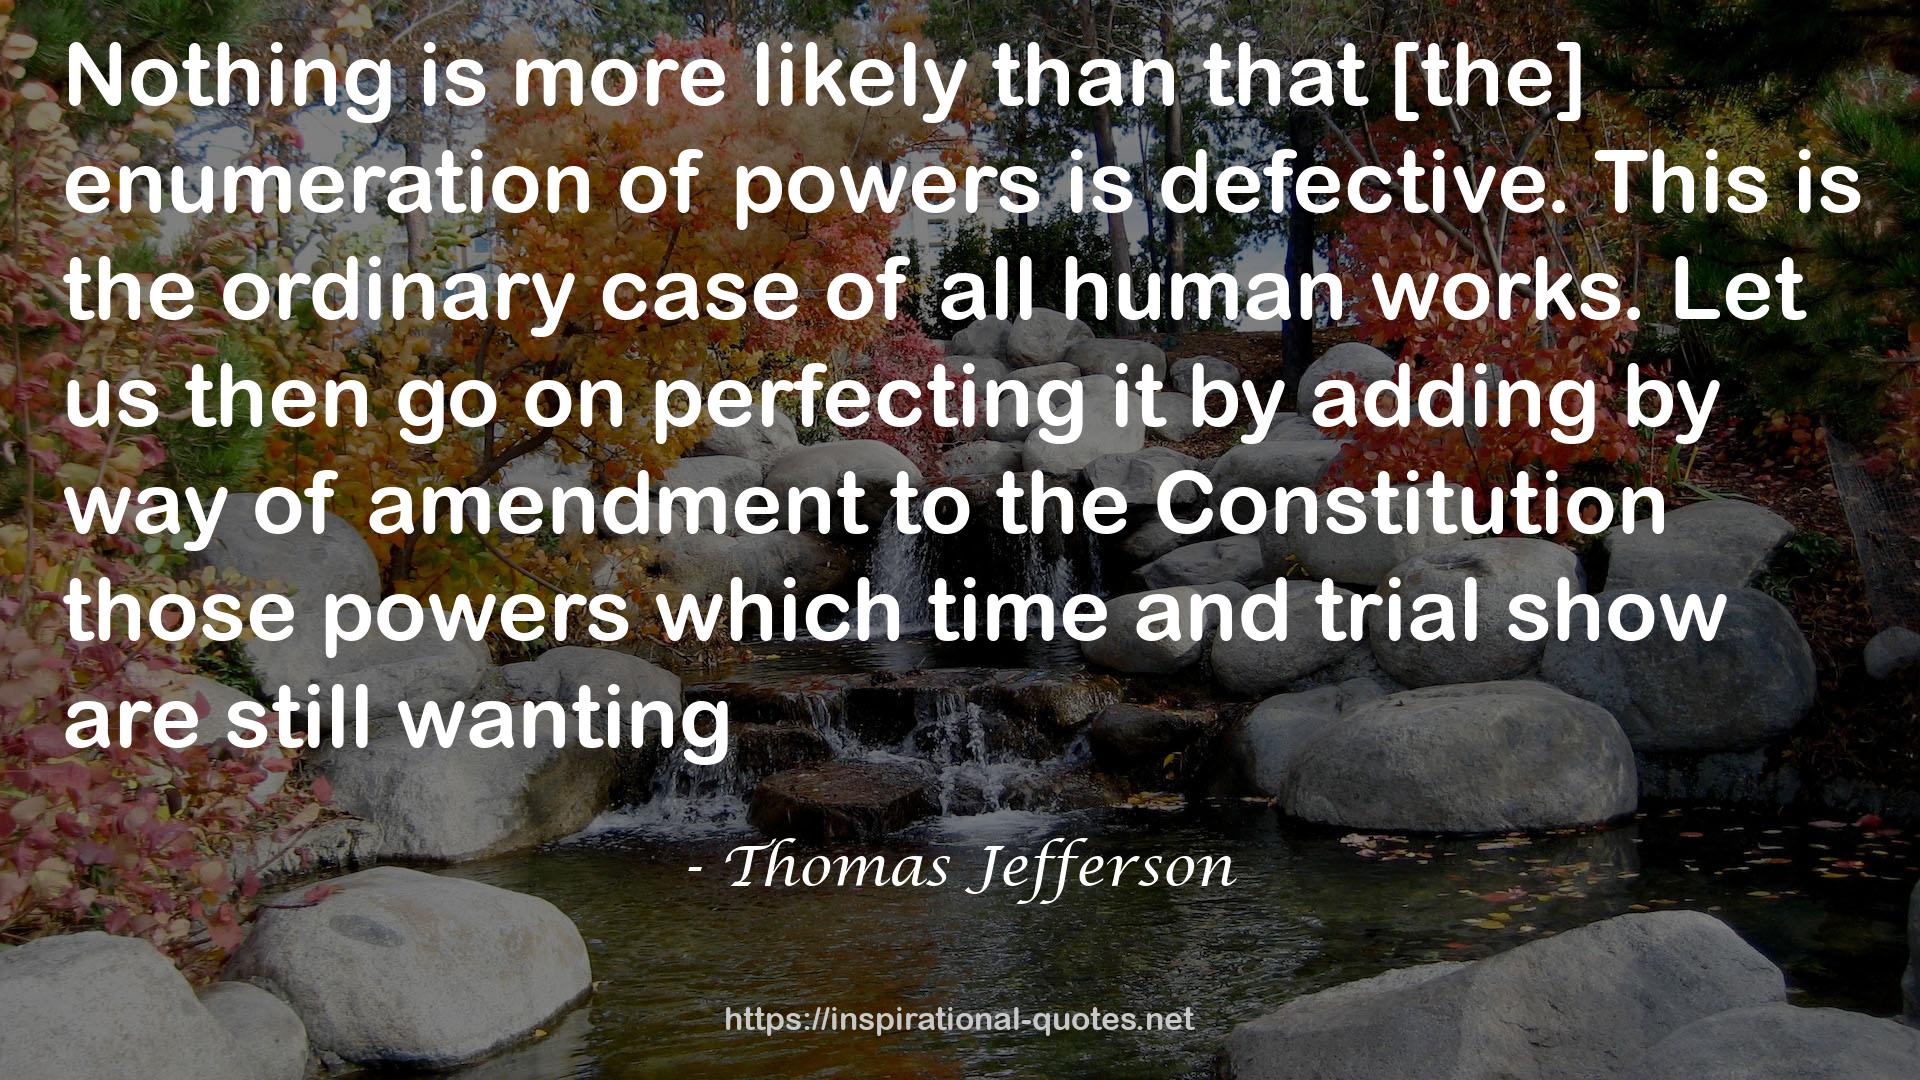 Thomas Jefferson QUOTES